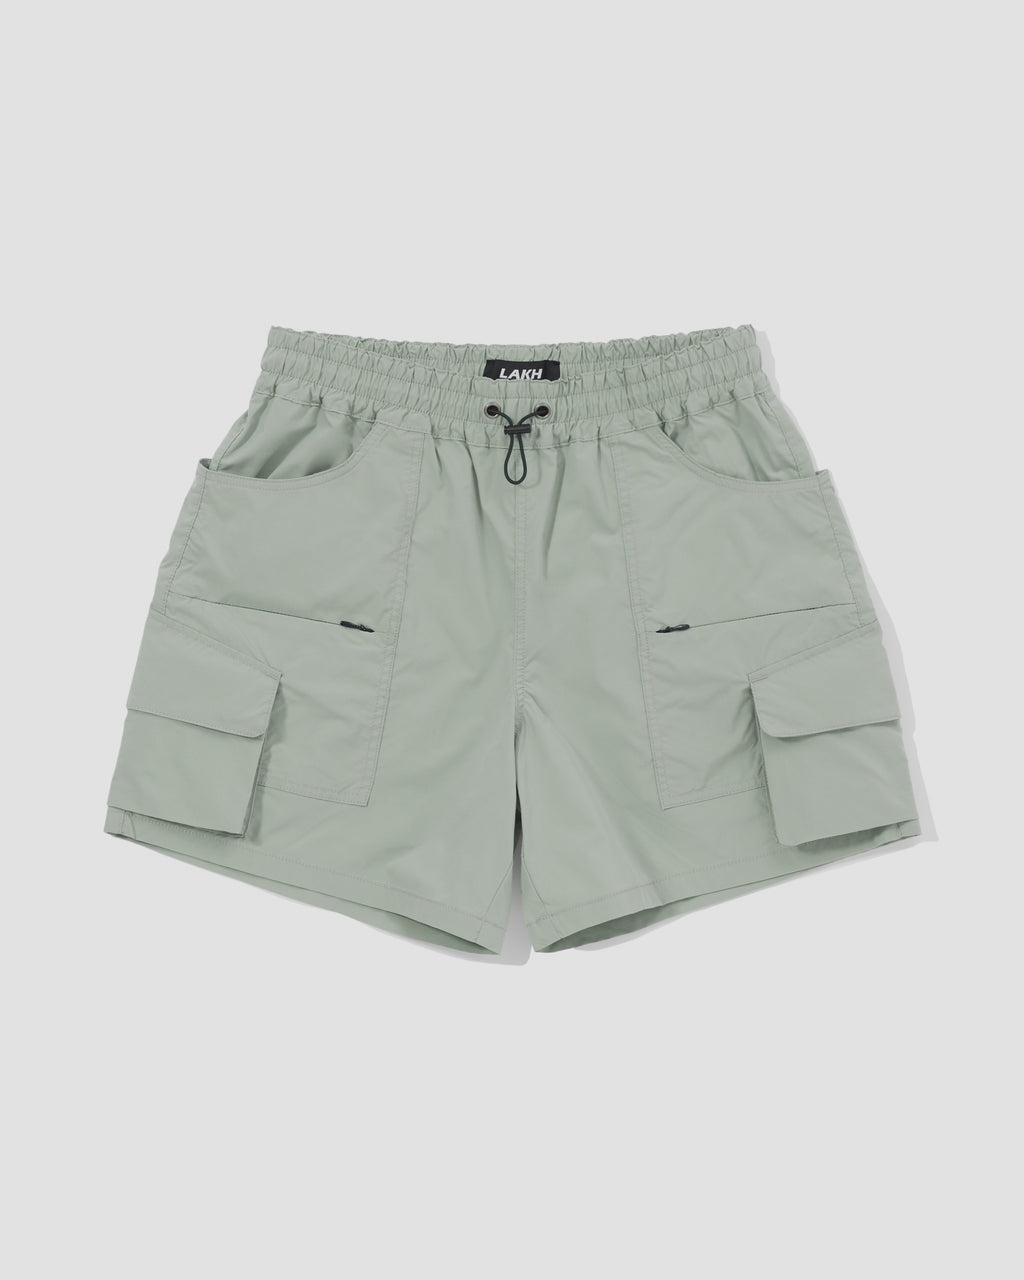 Field Shorts - Pistachio